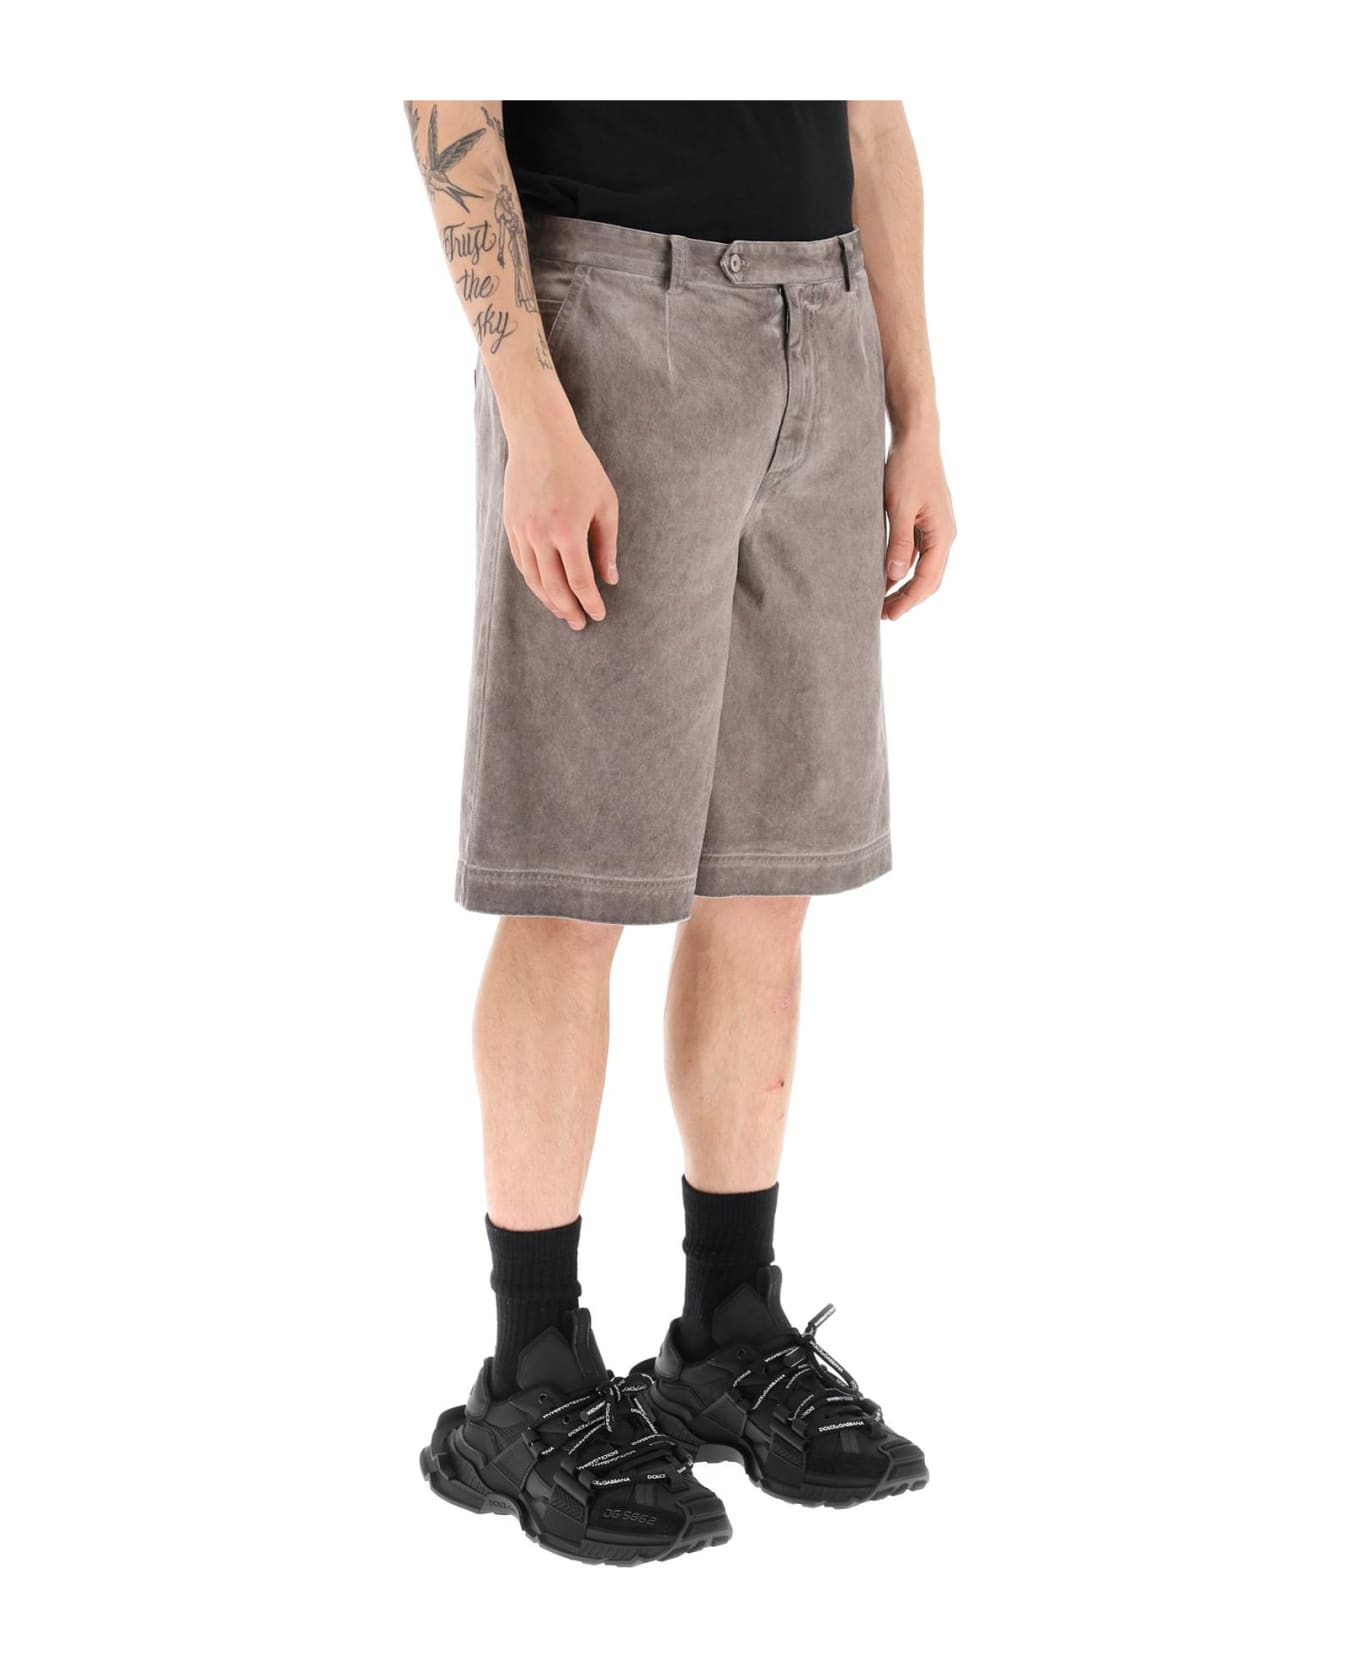 Dolce & Gabbana Bermuda Shorts - Marrone/grigio